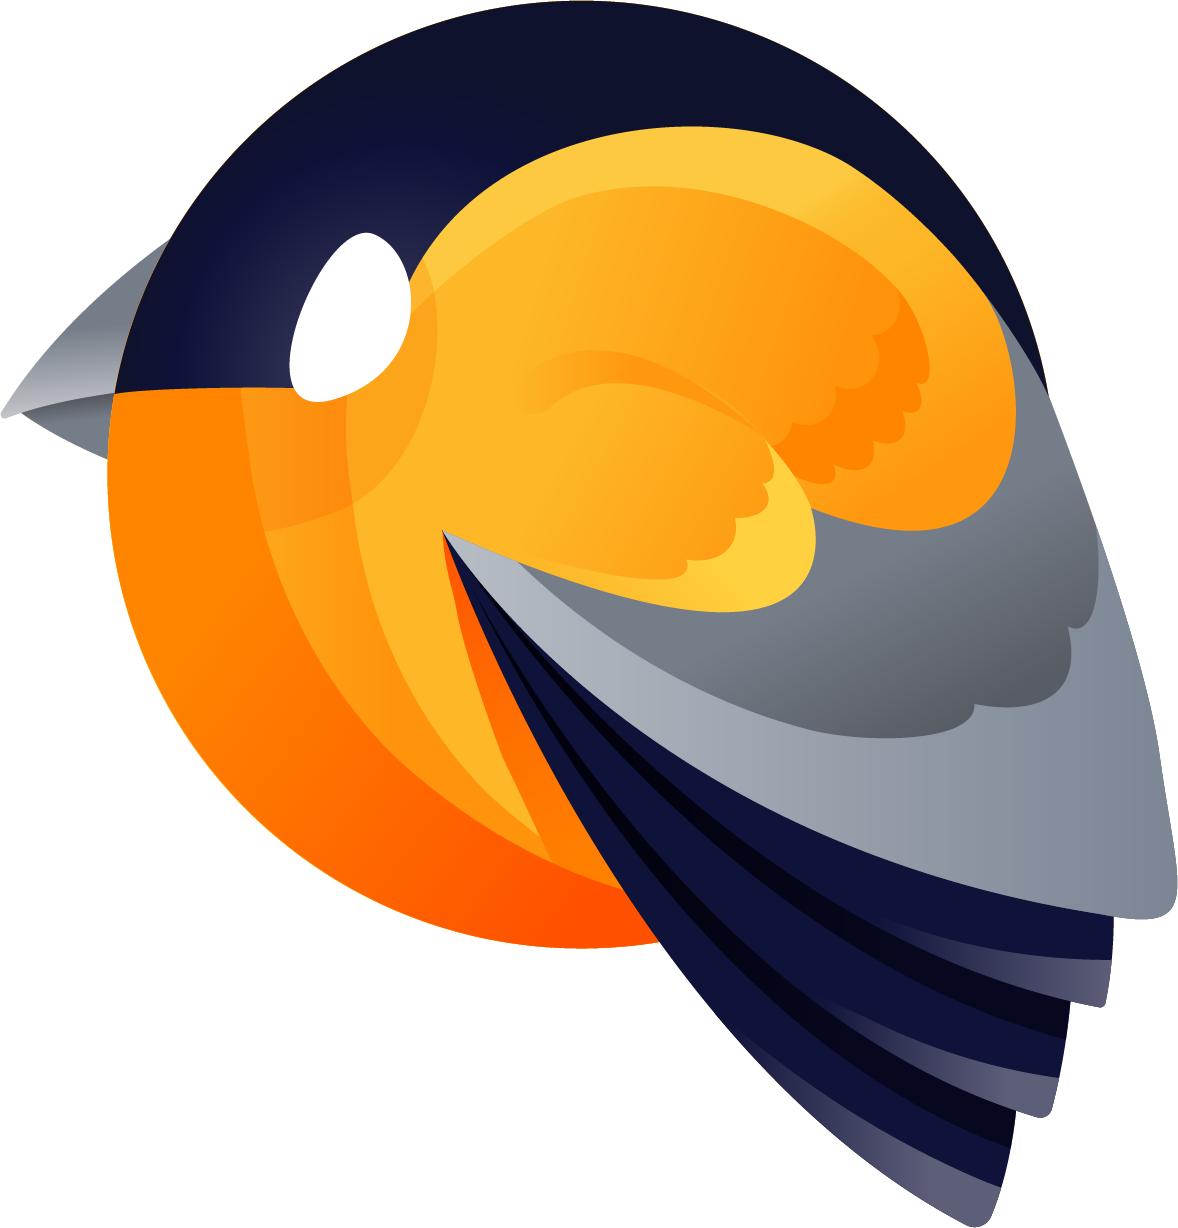 Finch bird logo design graphic art ILLUSTRATION 